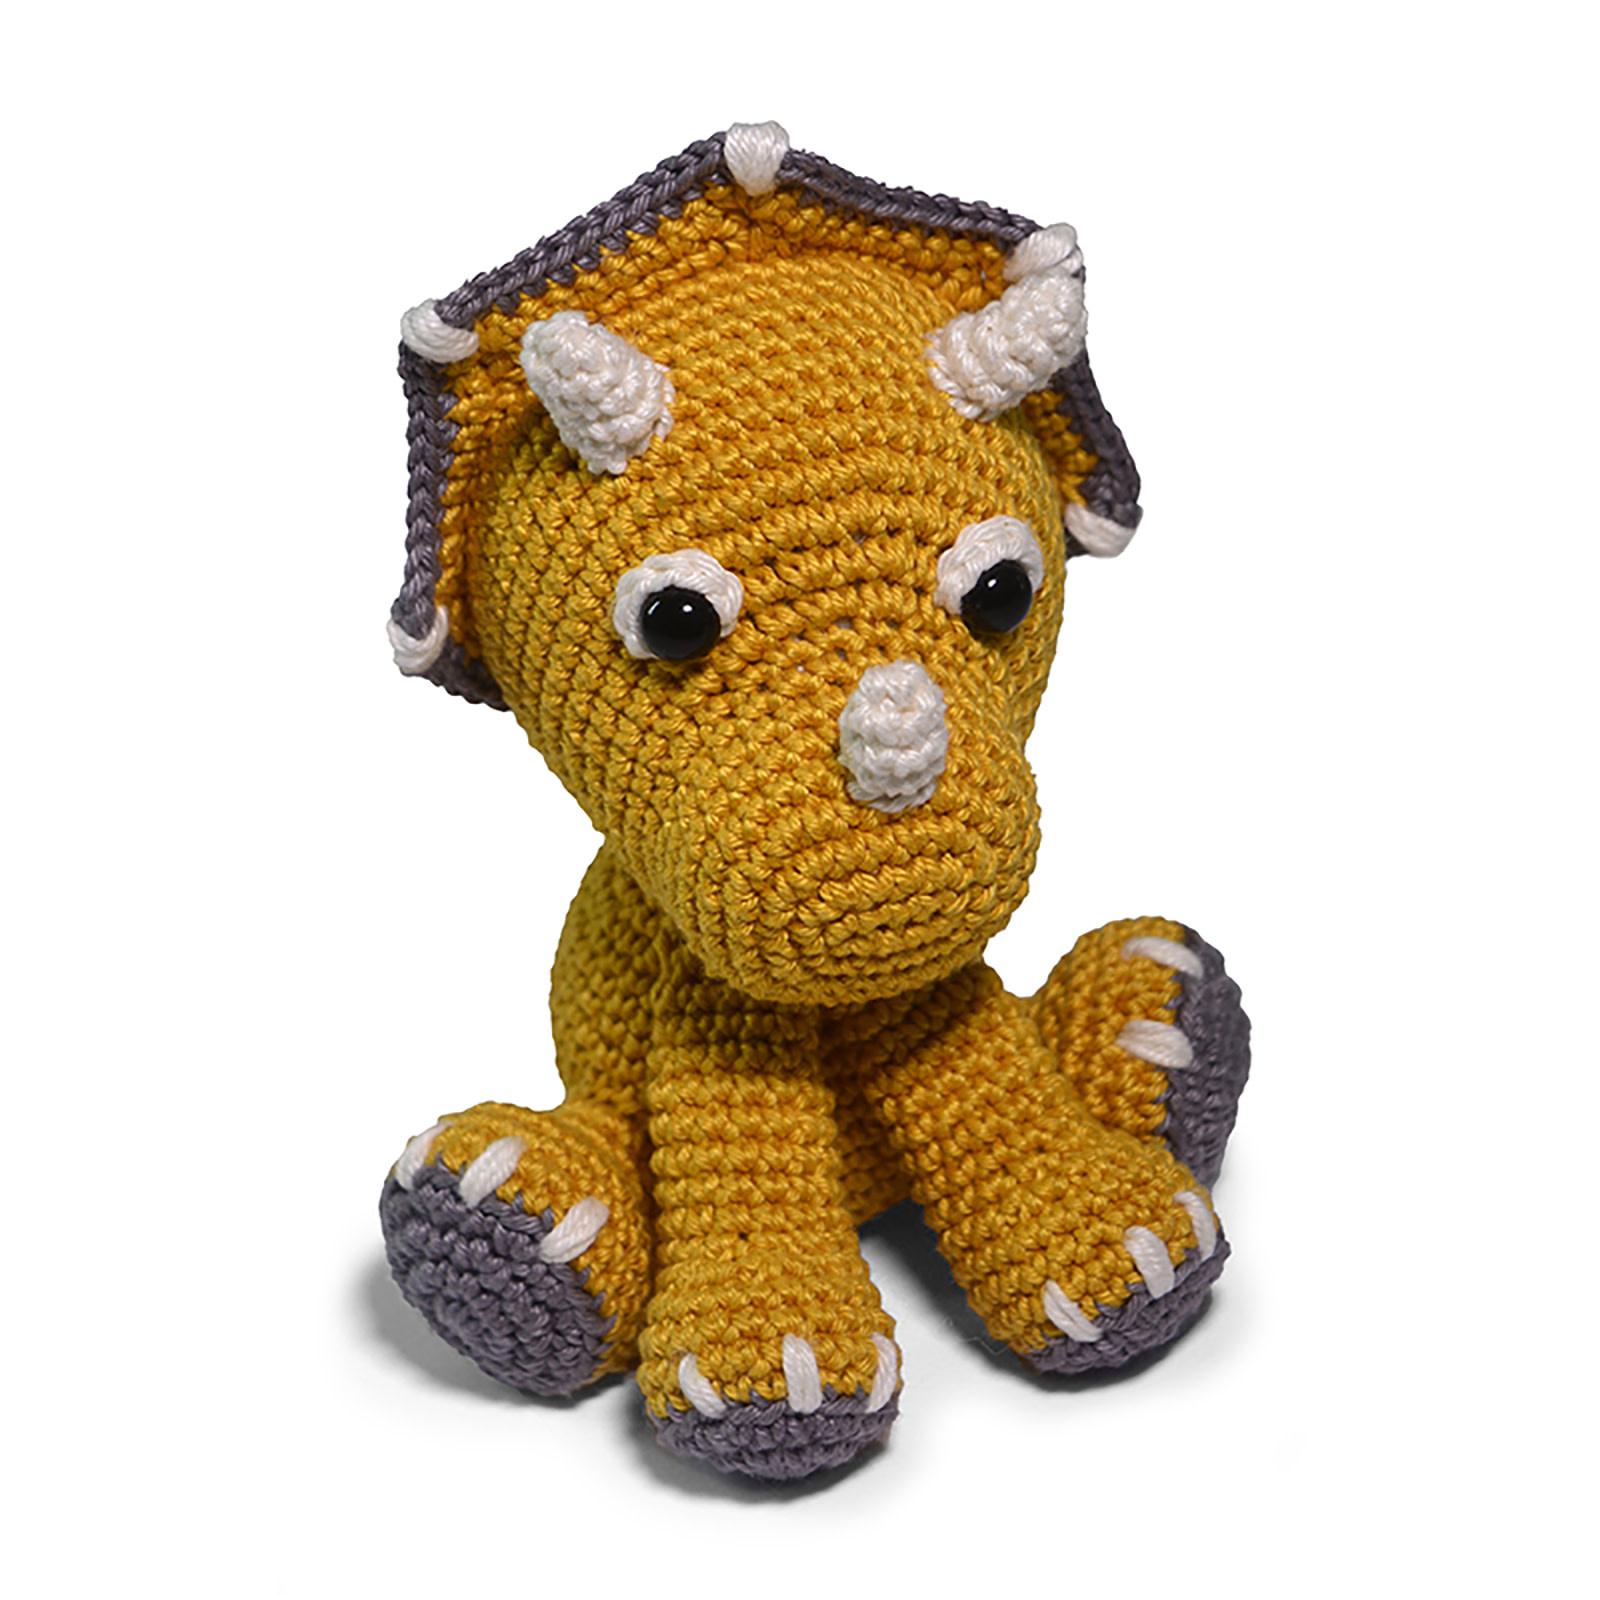 Safari Baby Amigurumi Crochet Kits from Circulo